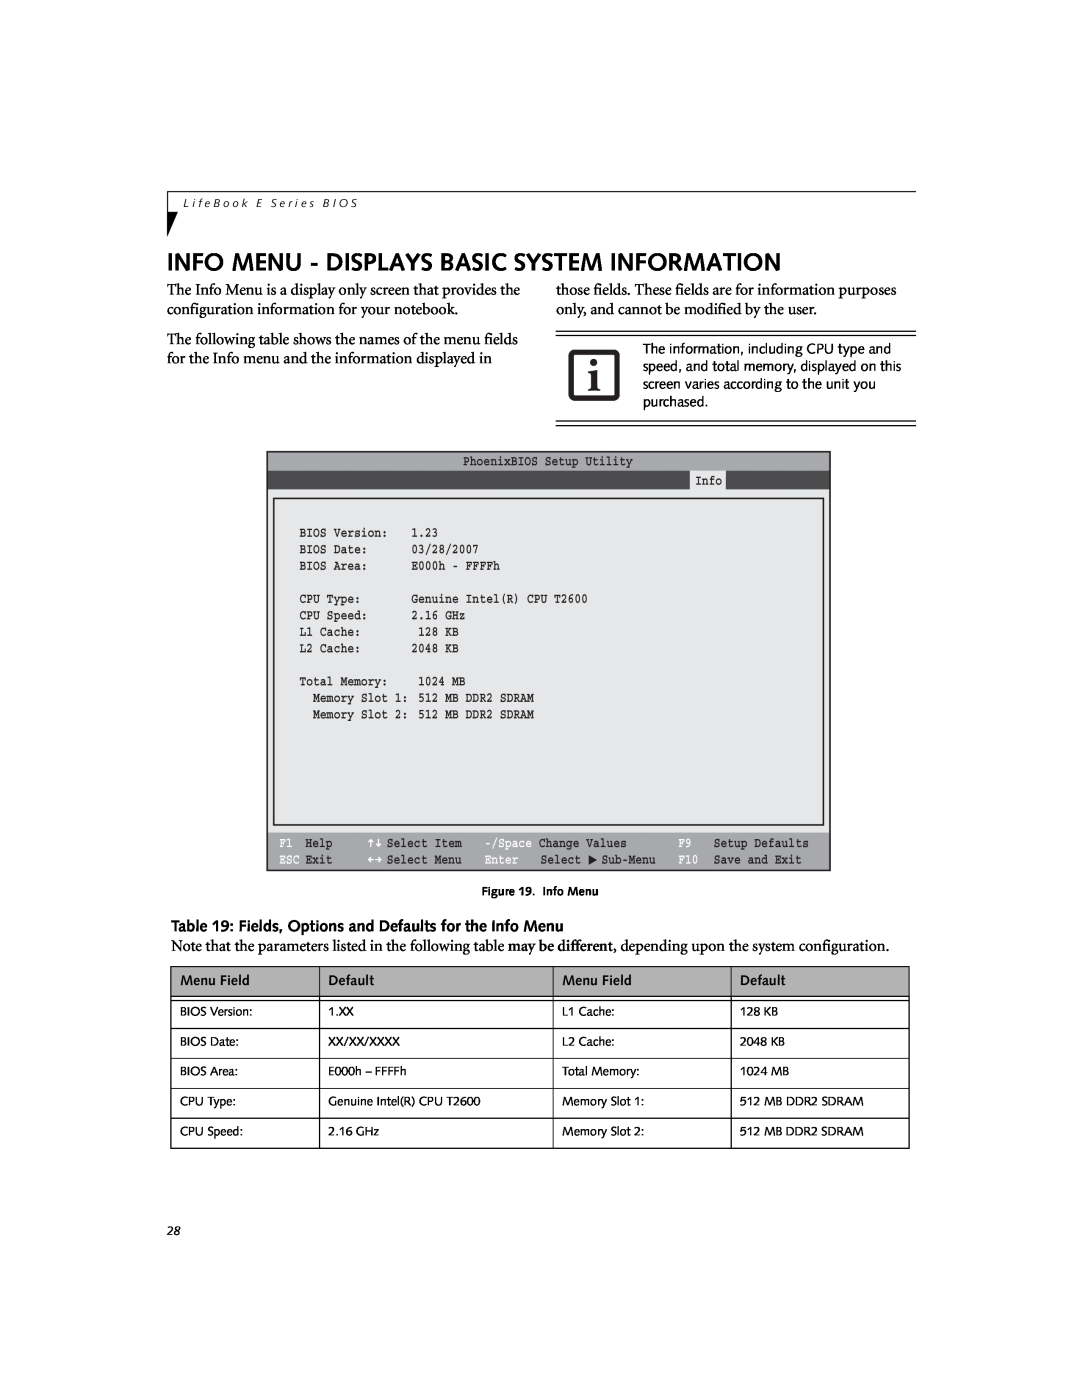 Fujitsu Siemens Computers E8110 manual Info Menu - Displays Basic System Information 